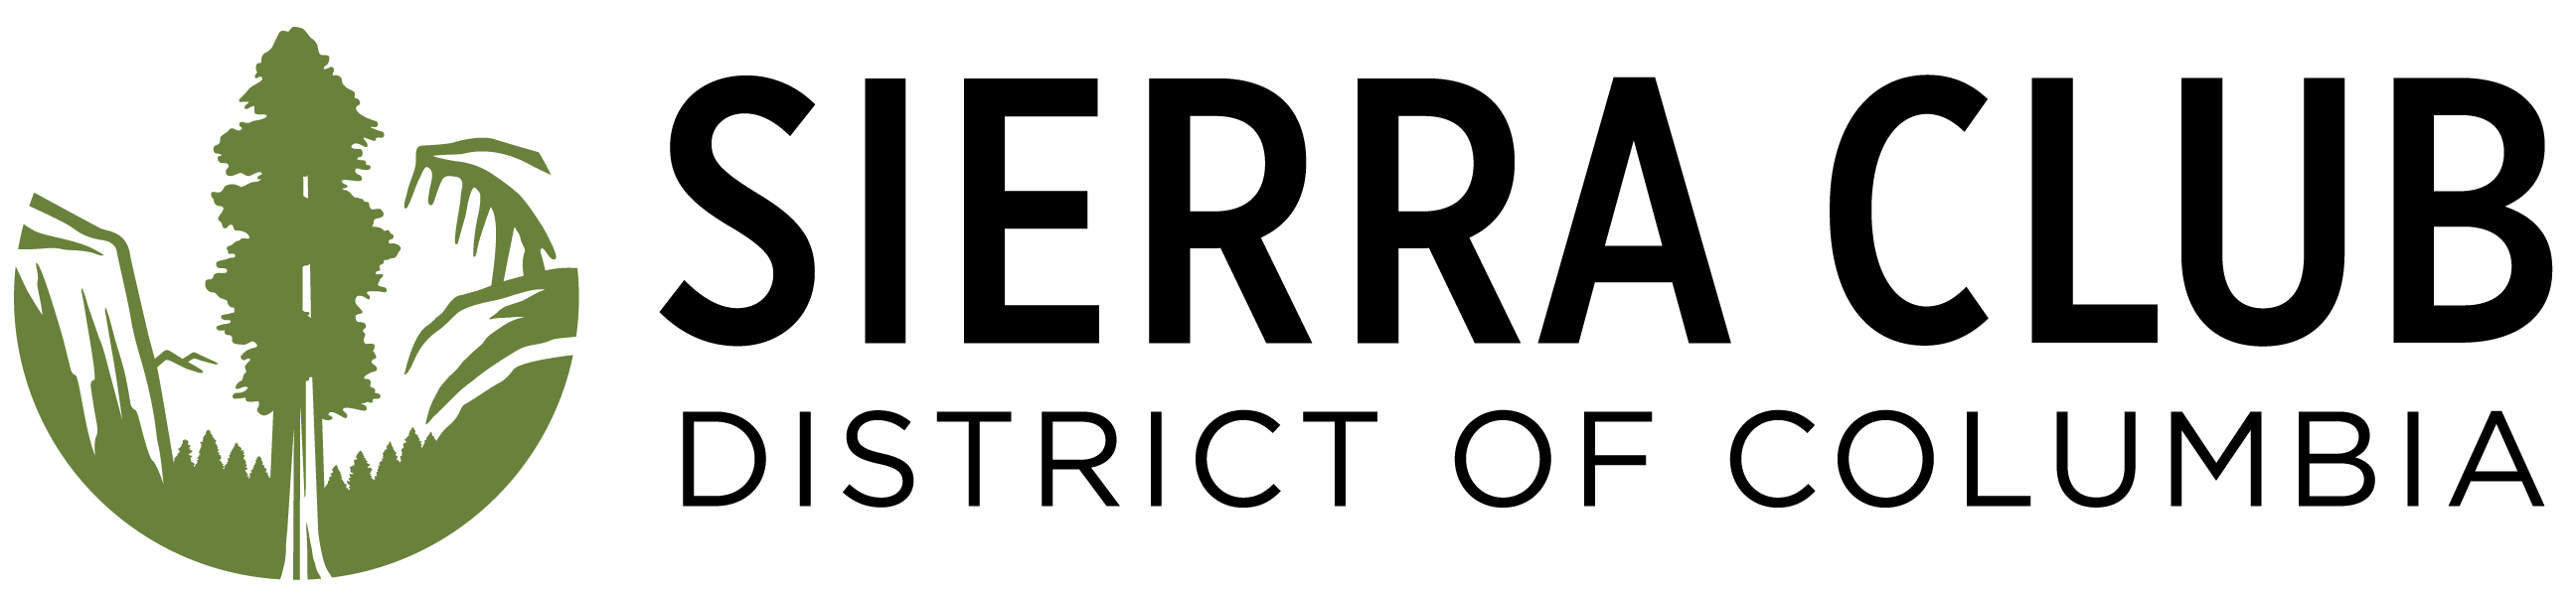 dc Chapter logo